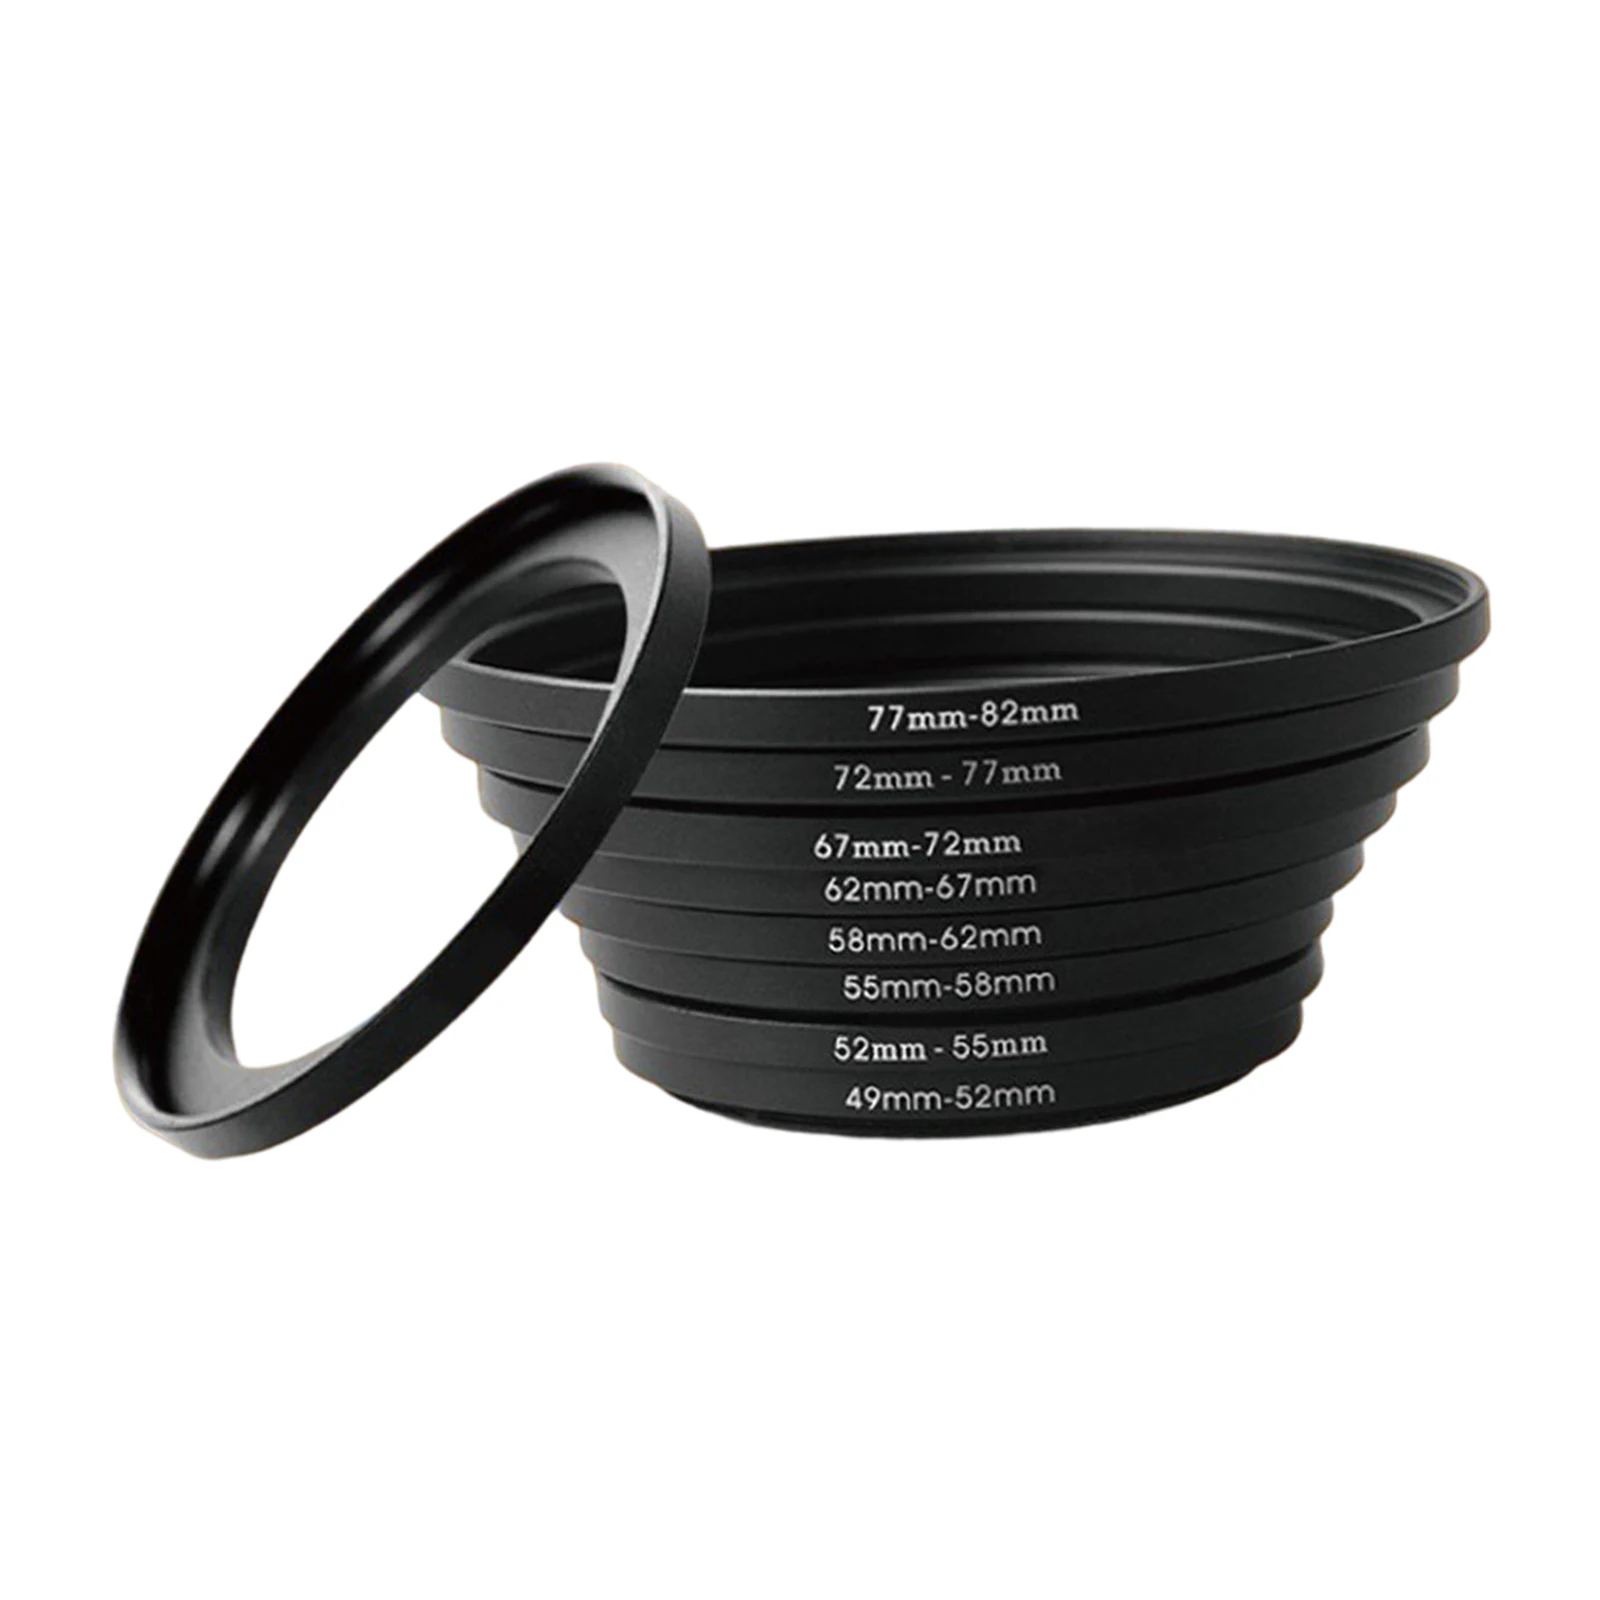 8 Pieces Aluminum Rings Lens Adapter Filter Kit for DSLR Camera